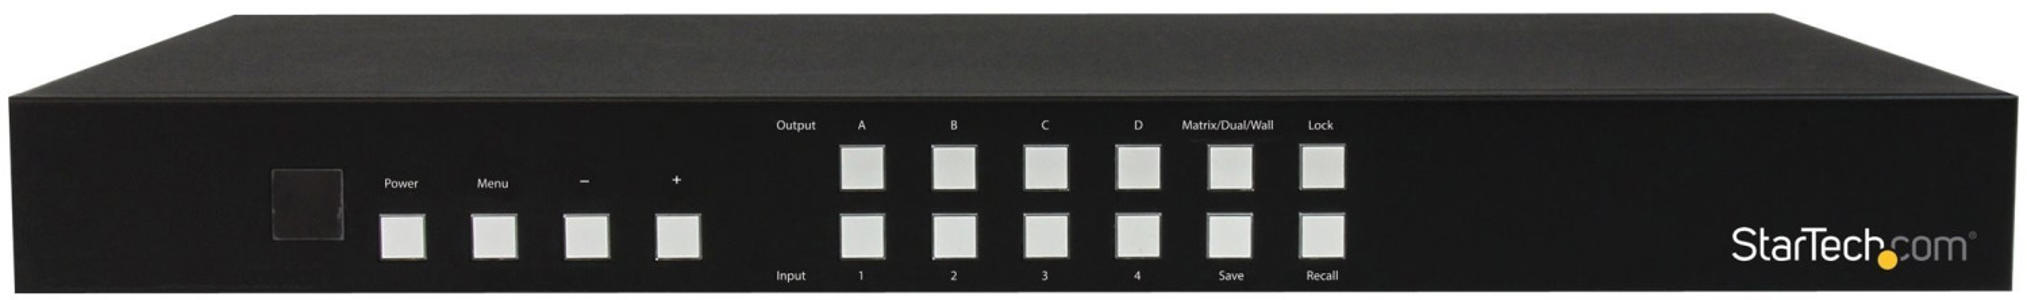 StarTech 4x4 HDMI Matrix Switch (VS424HDPIP)